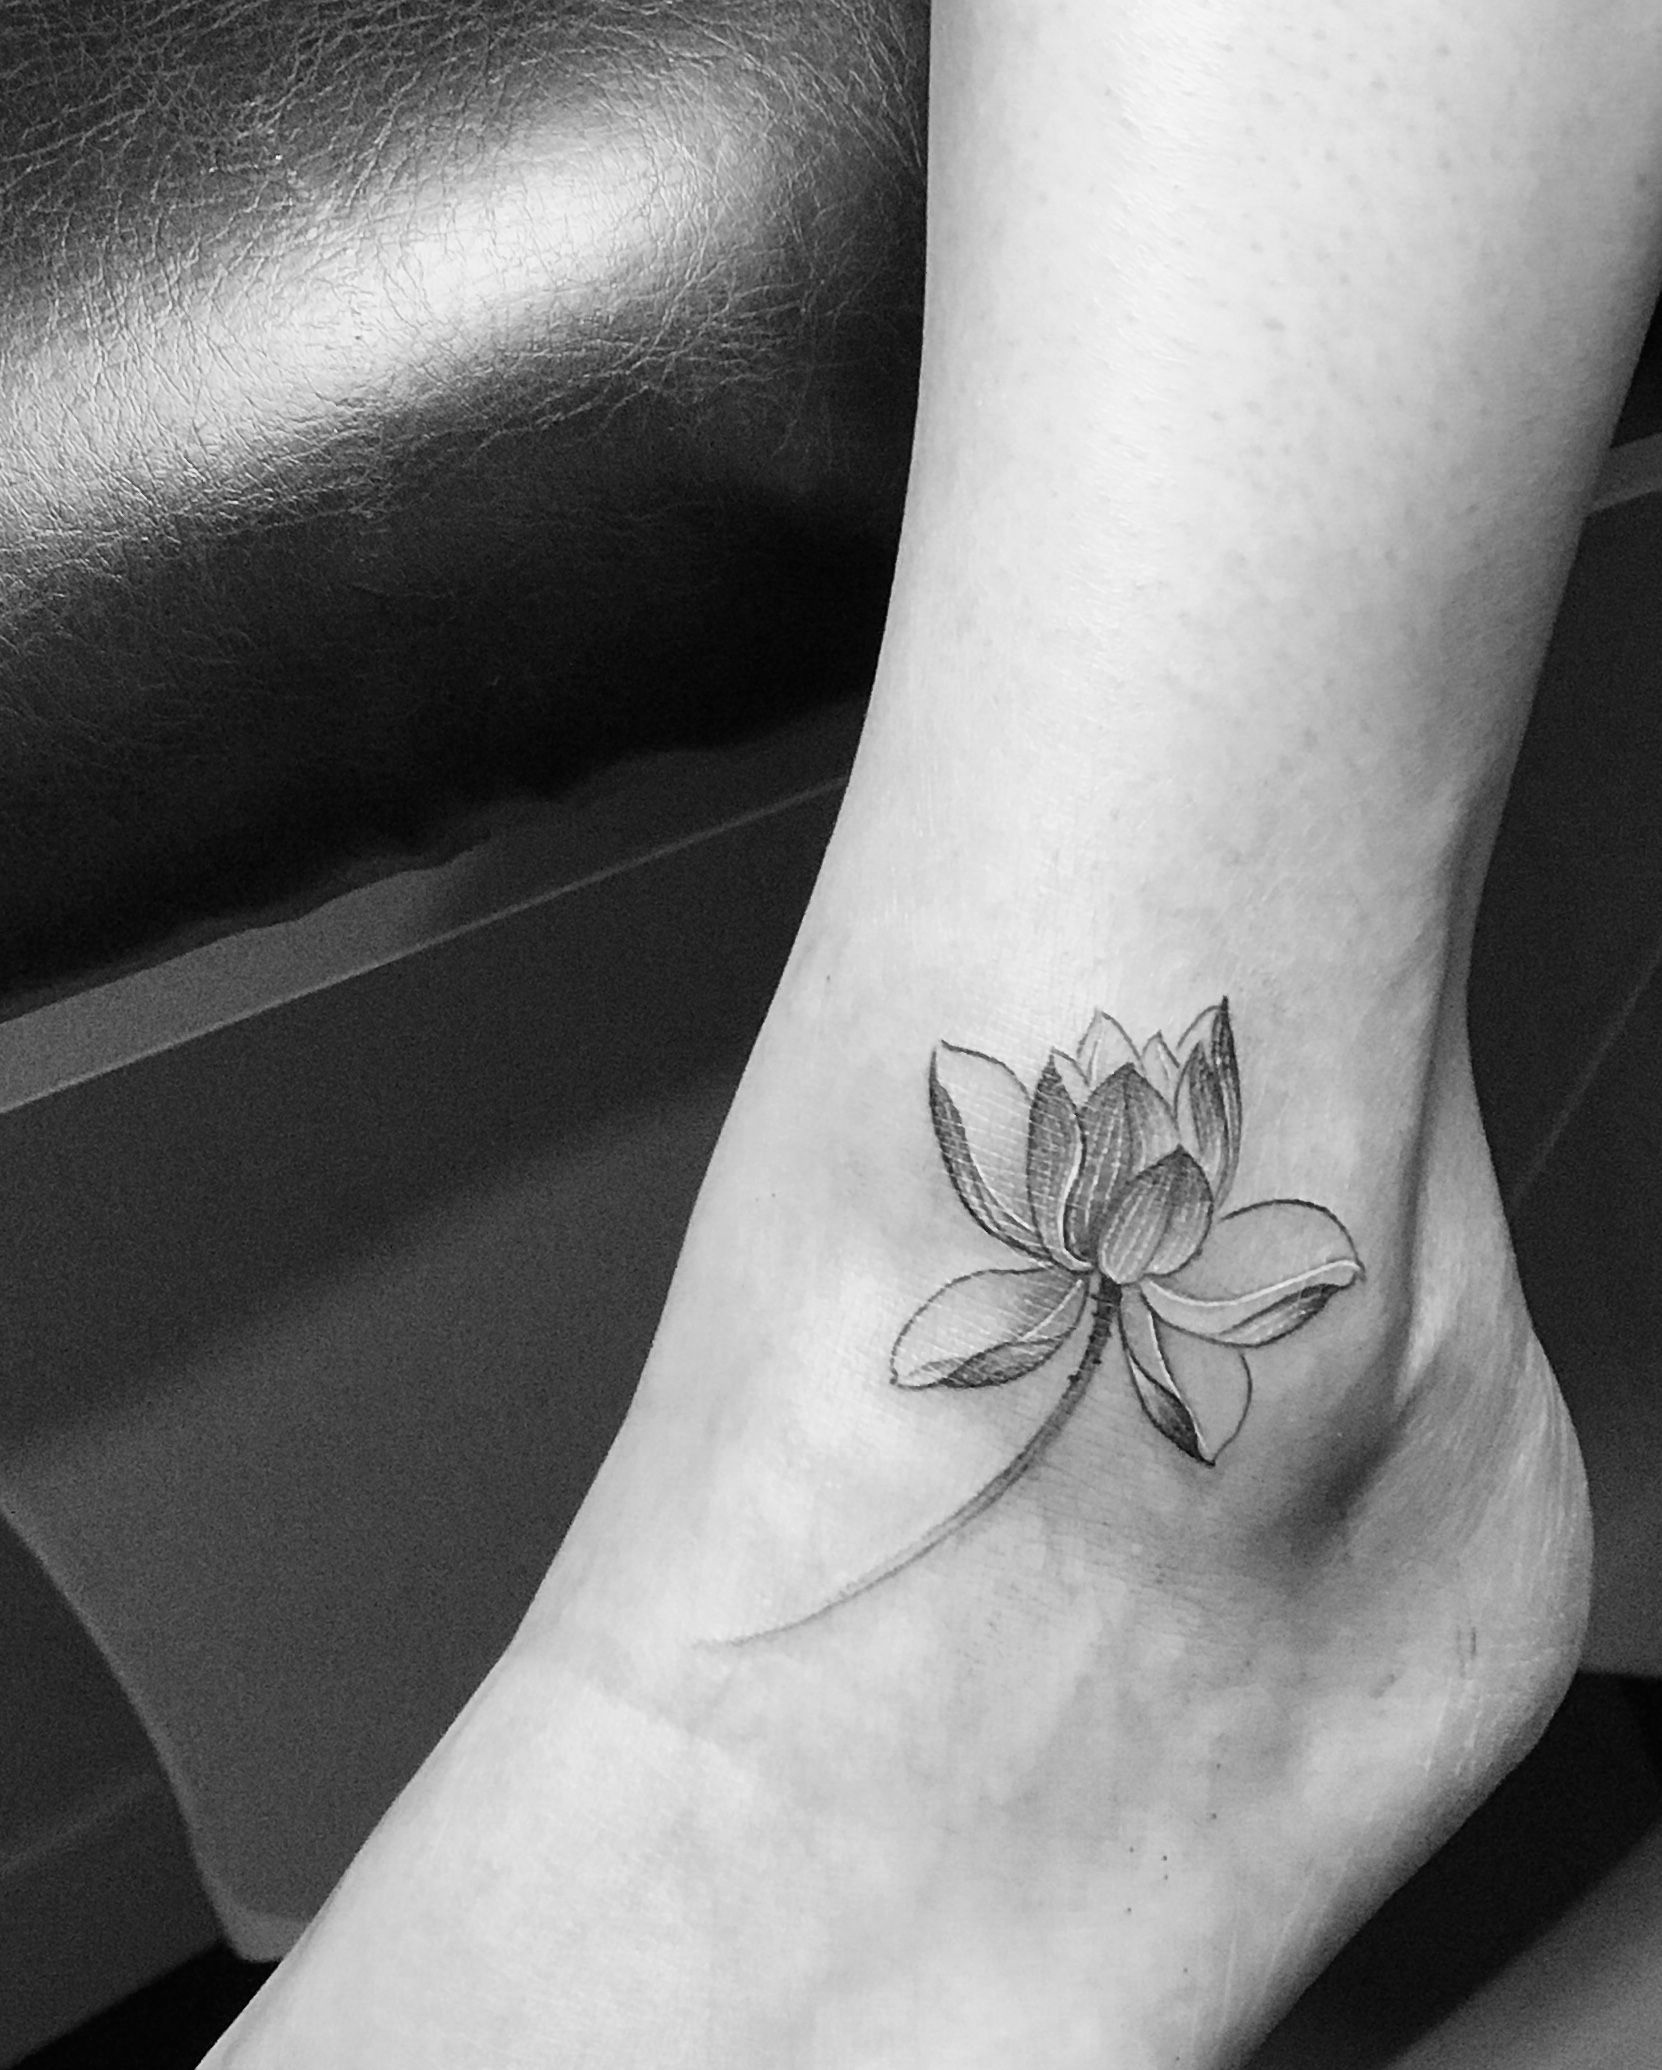 Tattoo Designs on Twitter Lotus tattoo on the ankle  httpstcoPKqGCE6jcq httpstcommW2K4N8UX  Twitter